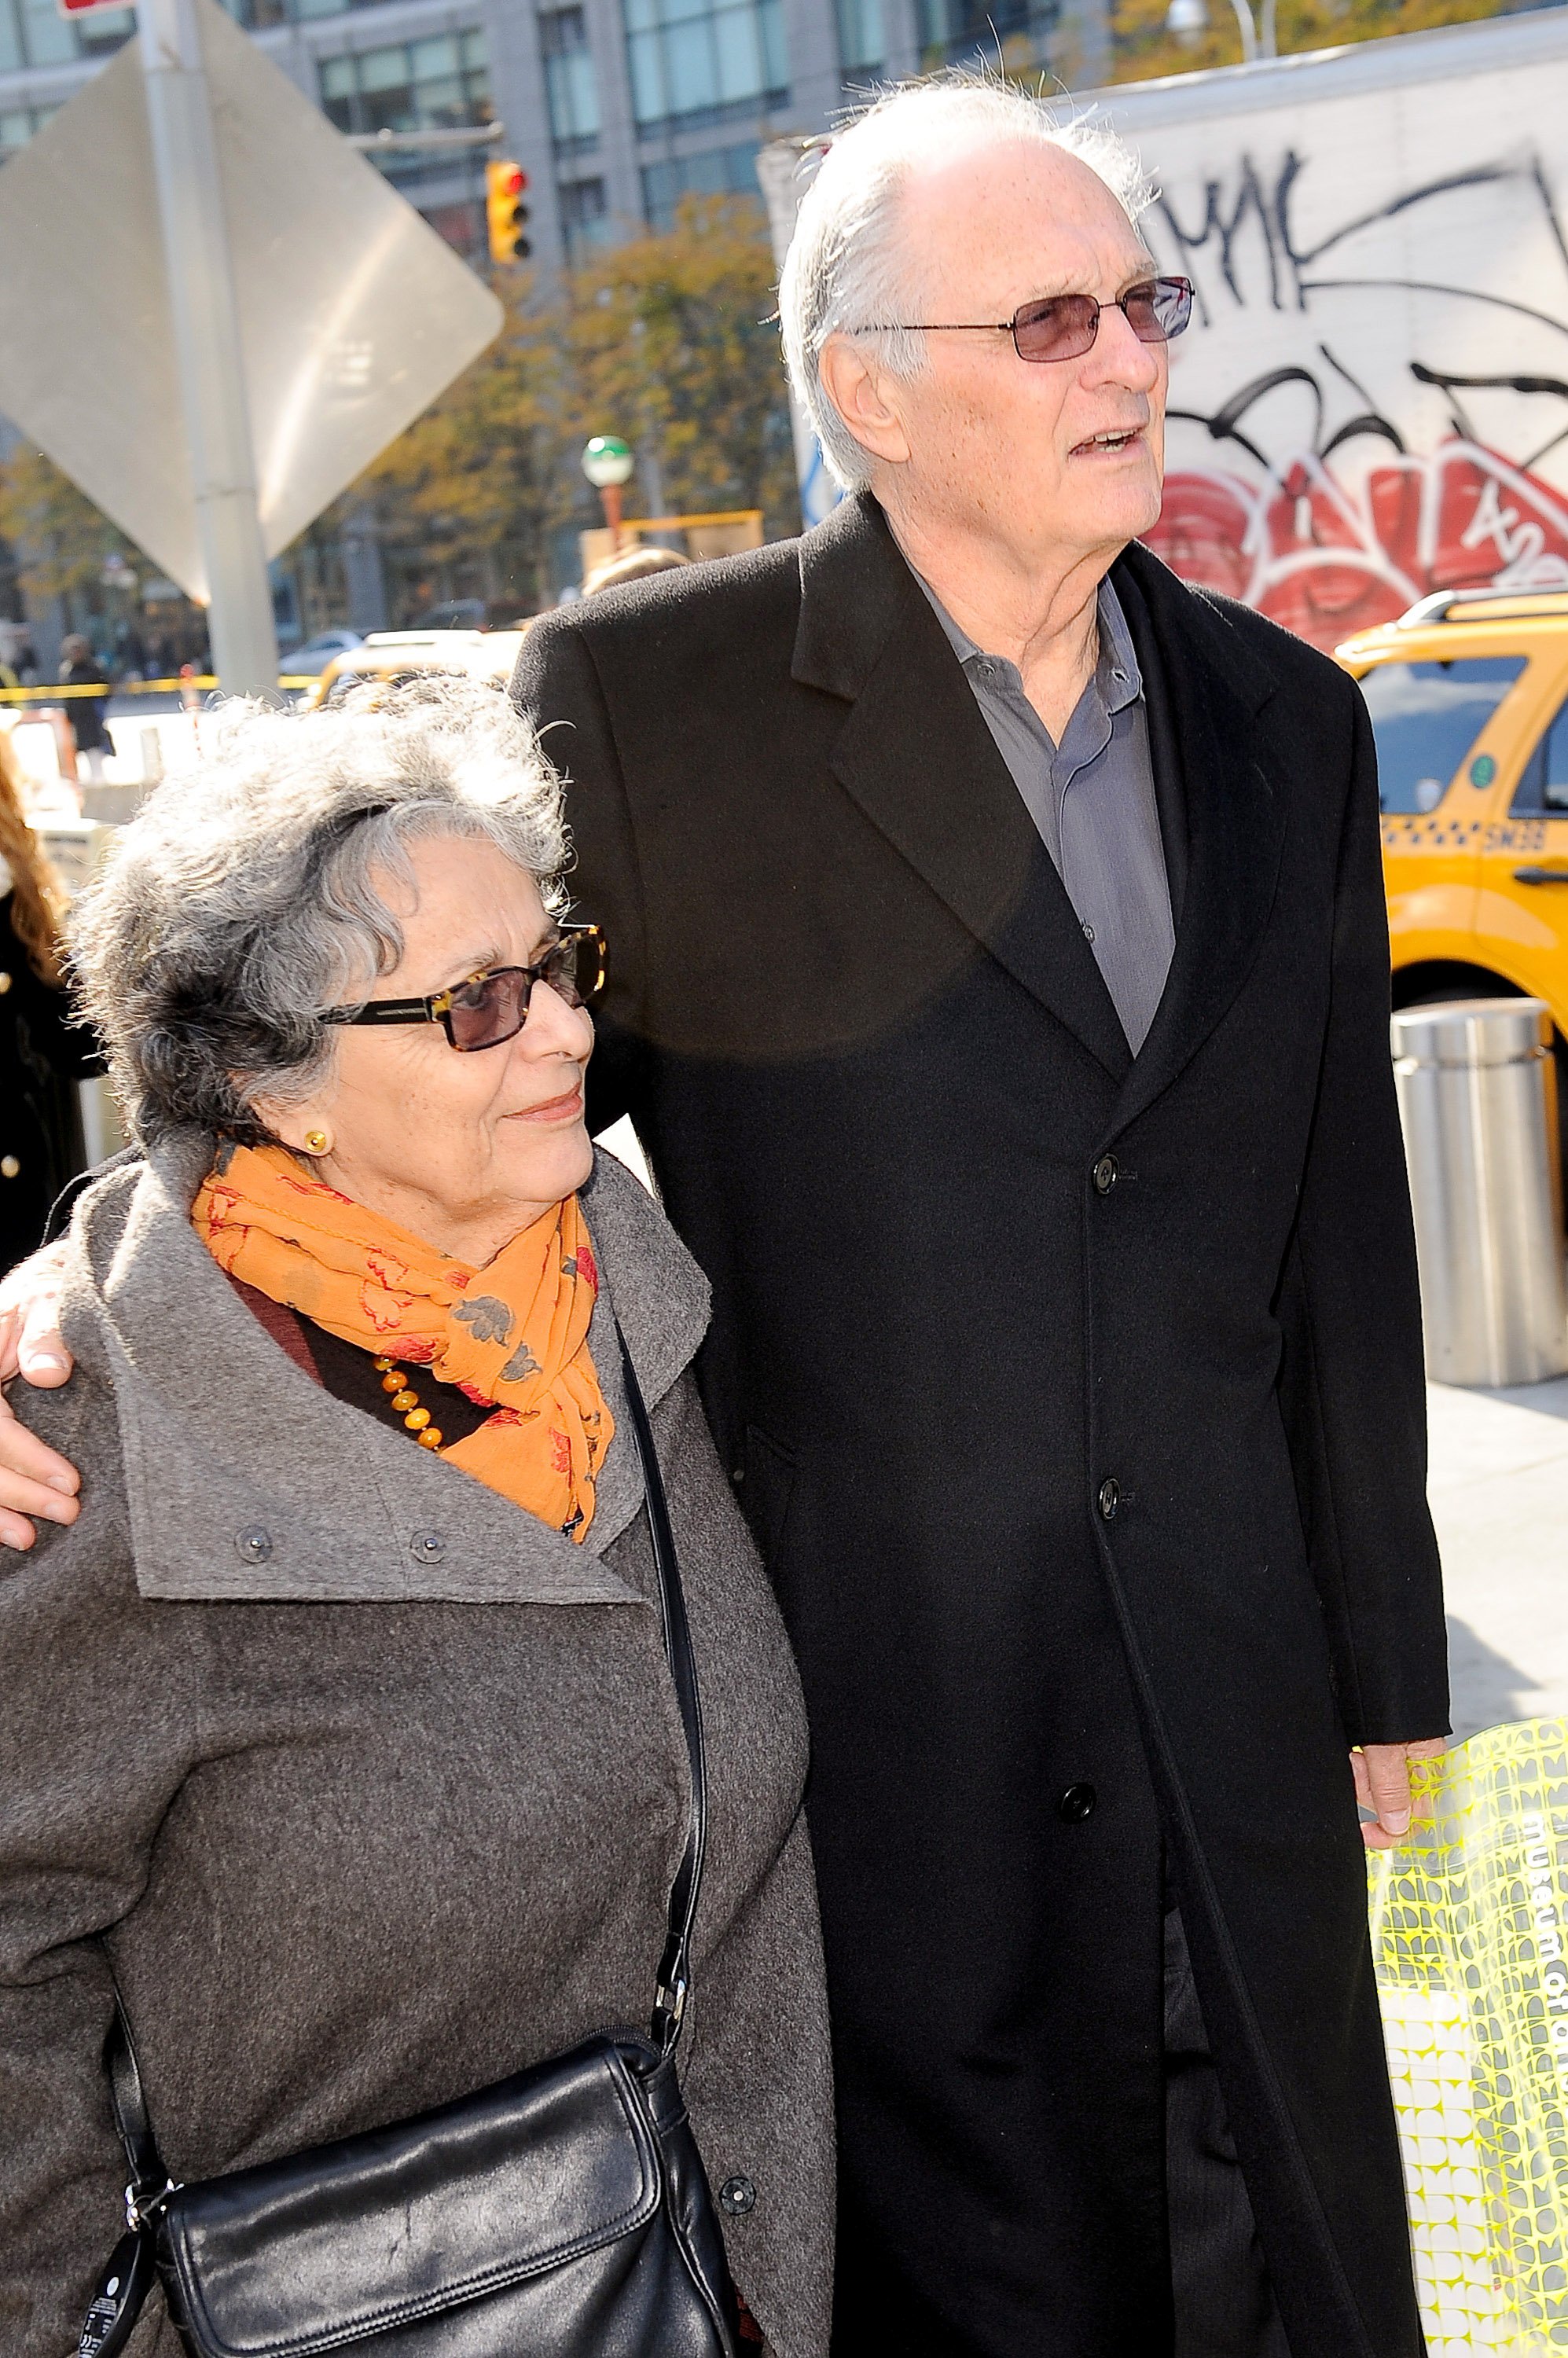 Arlene Alda and Alan Alda pictured walking in Midtown Manhattan on November 3, 2010 in New York City | Source: Getty Images